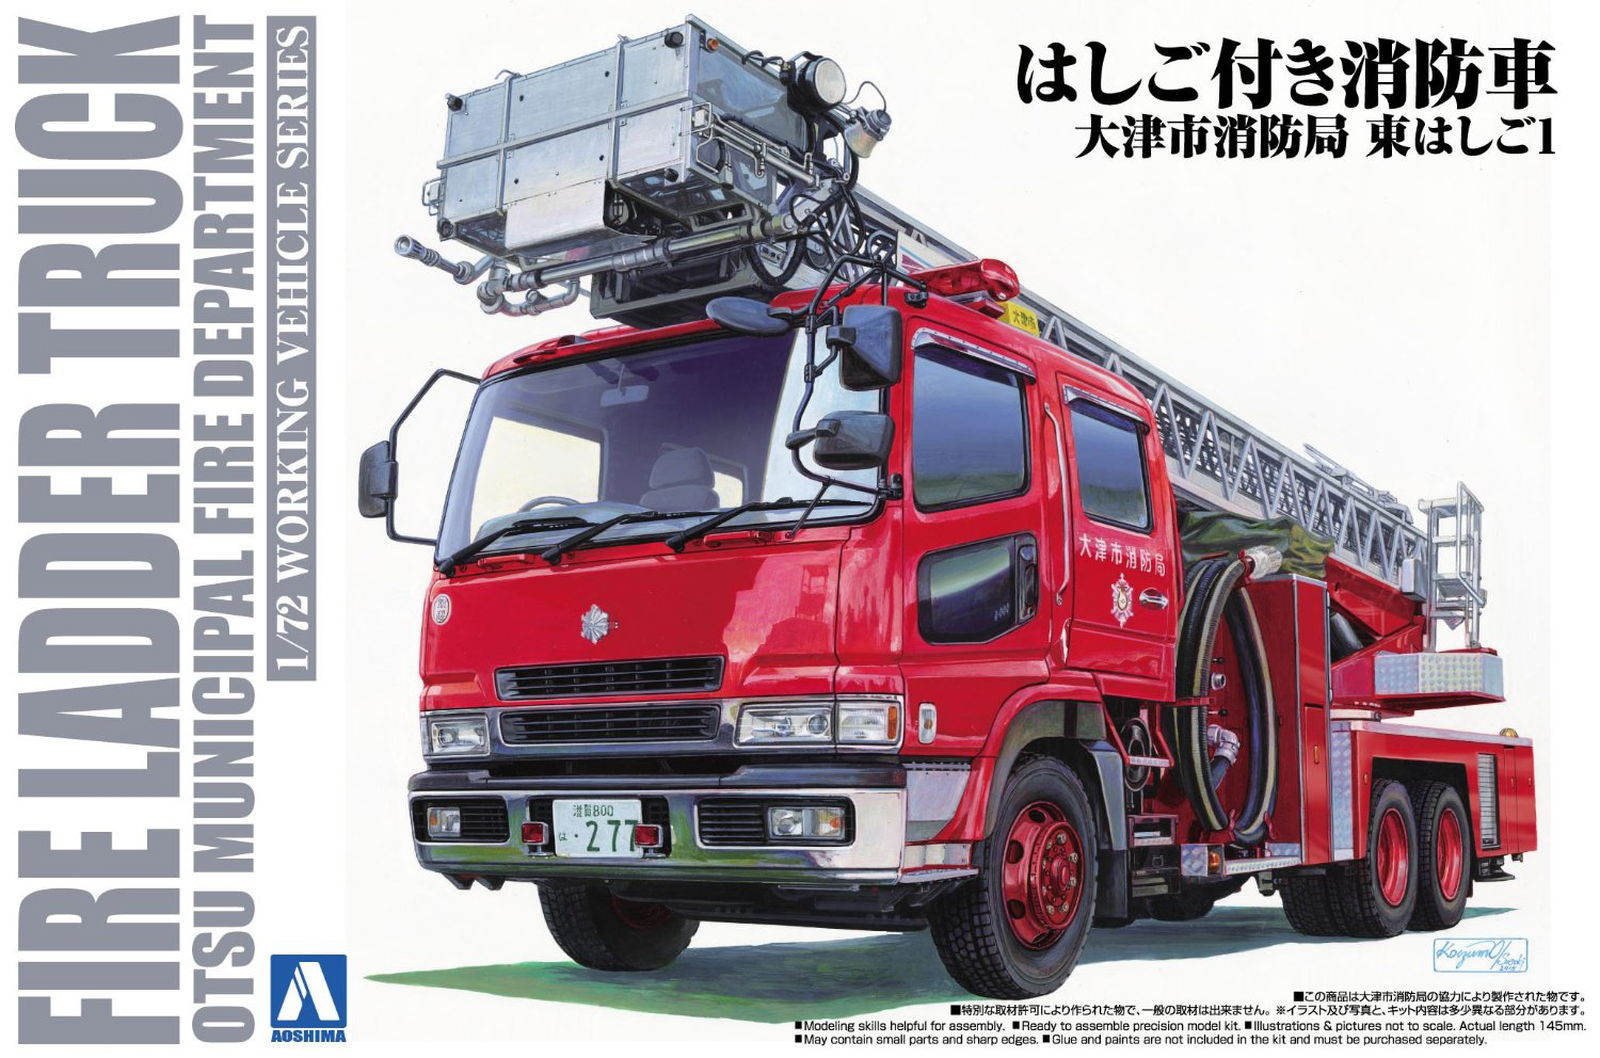 Aoshima Working Vehicle No.2 Fire Ladder Truck - BanzaiHobby